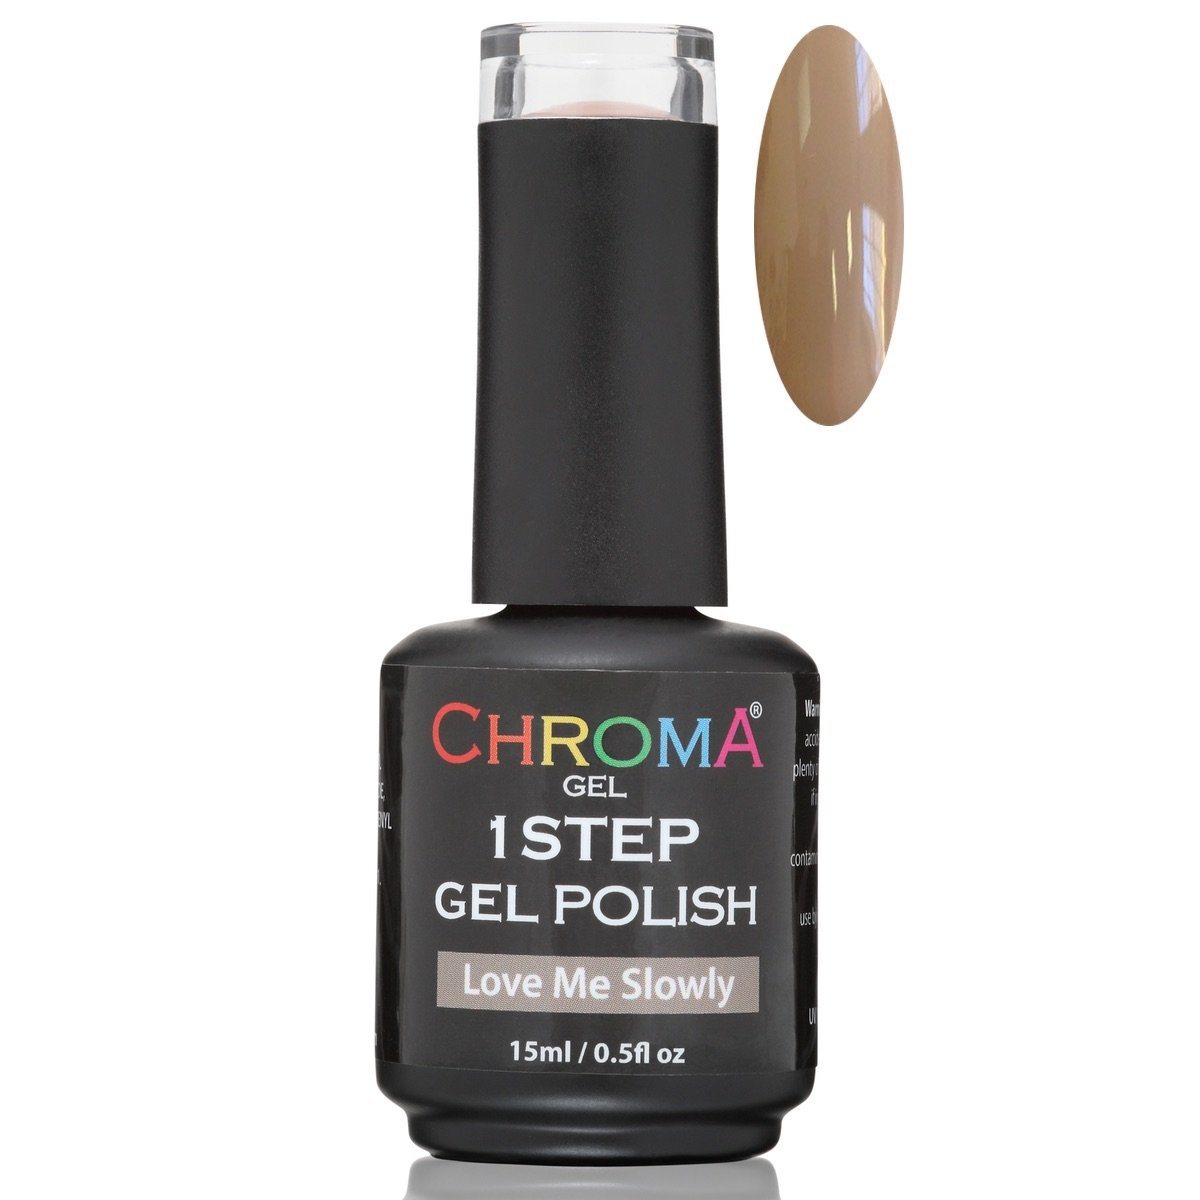 Chroma Gel 1 Step Gel Polish Love Me Slowly No.8 - Beauty Hair Products LtdChroma Gel